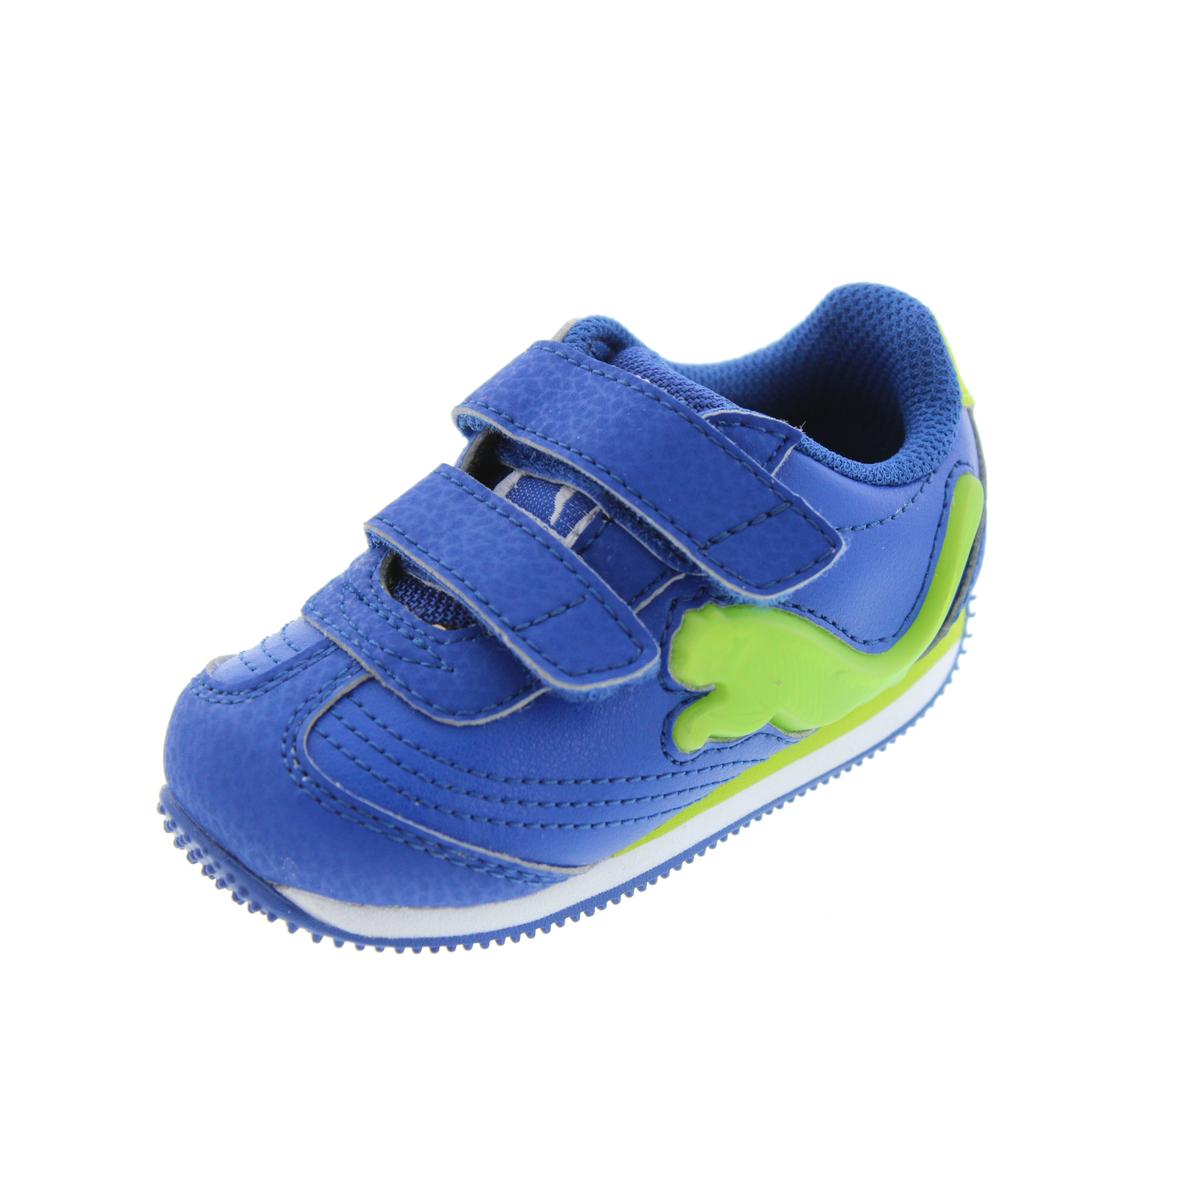 Puma 0423 Speeder Illuminesc Light-Up Toddler Sneakers Athletic Shoes ...